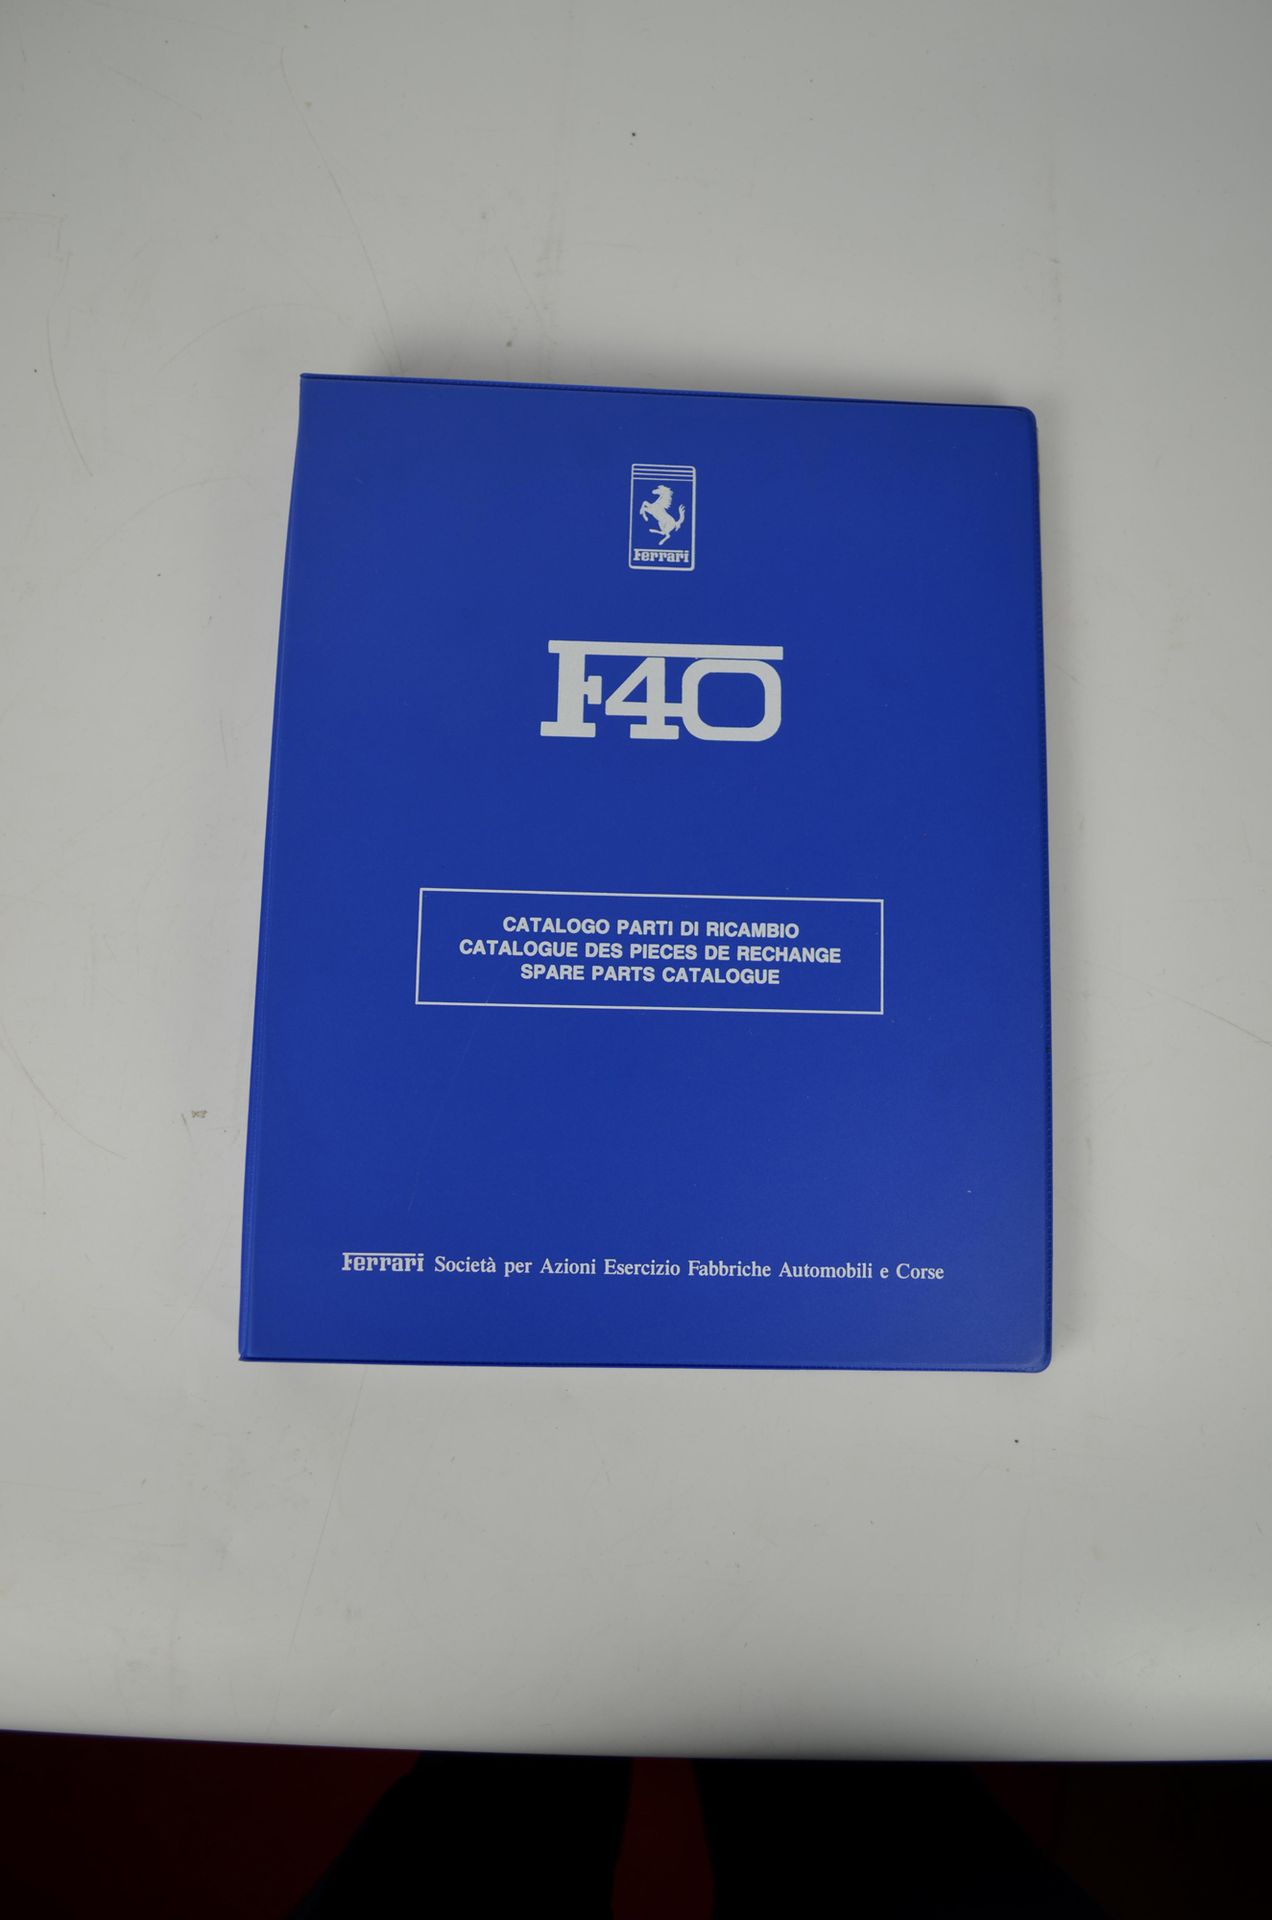 Catalogue de pièces de rechange F40 Catalogo ricambi F40